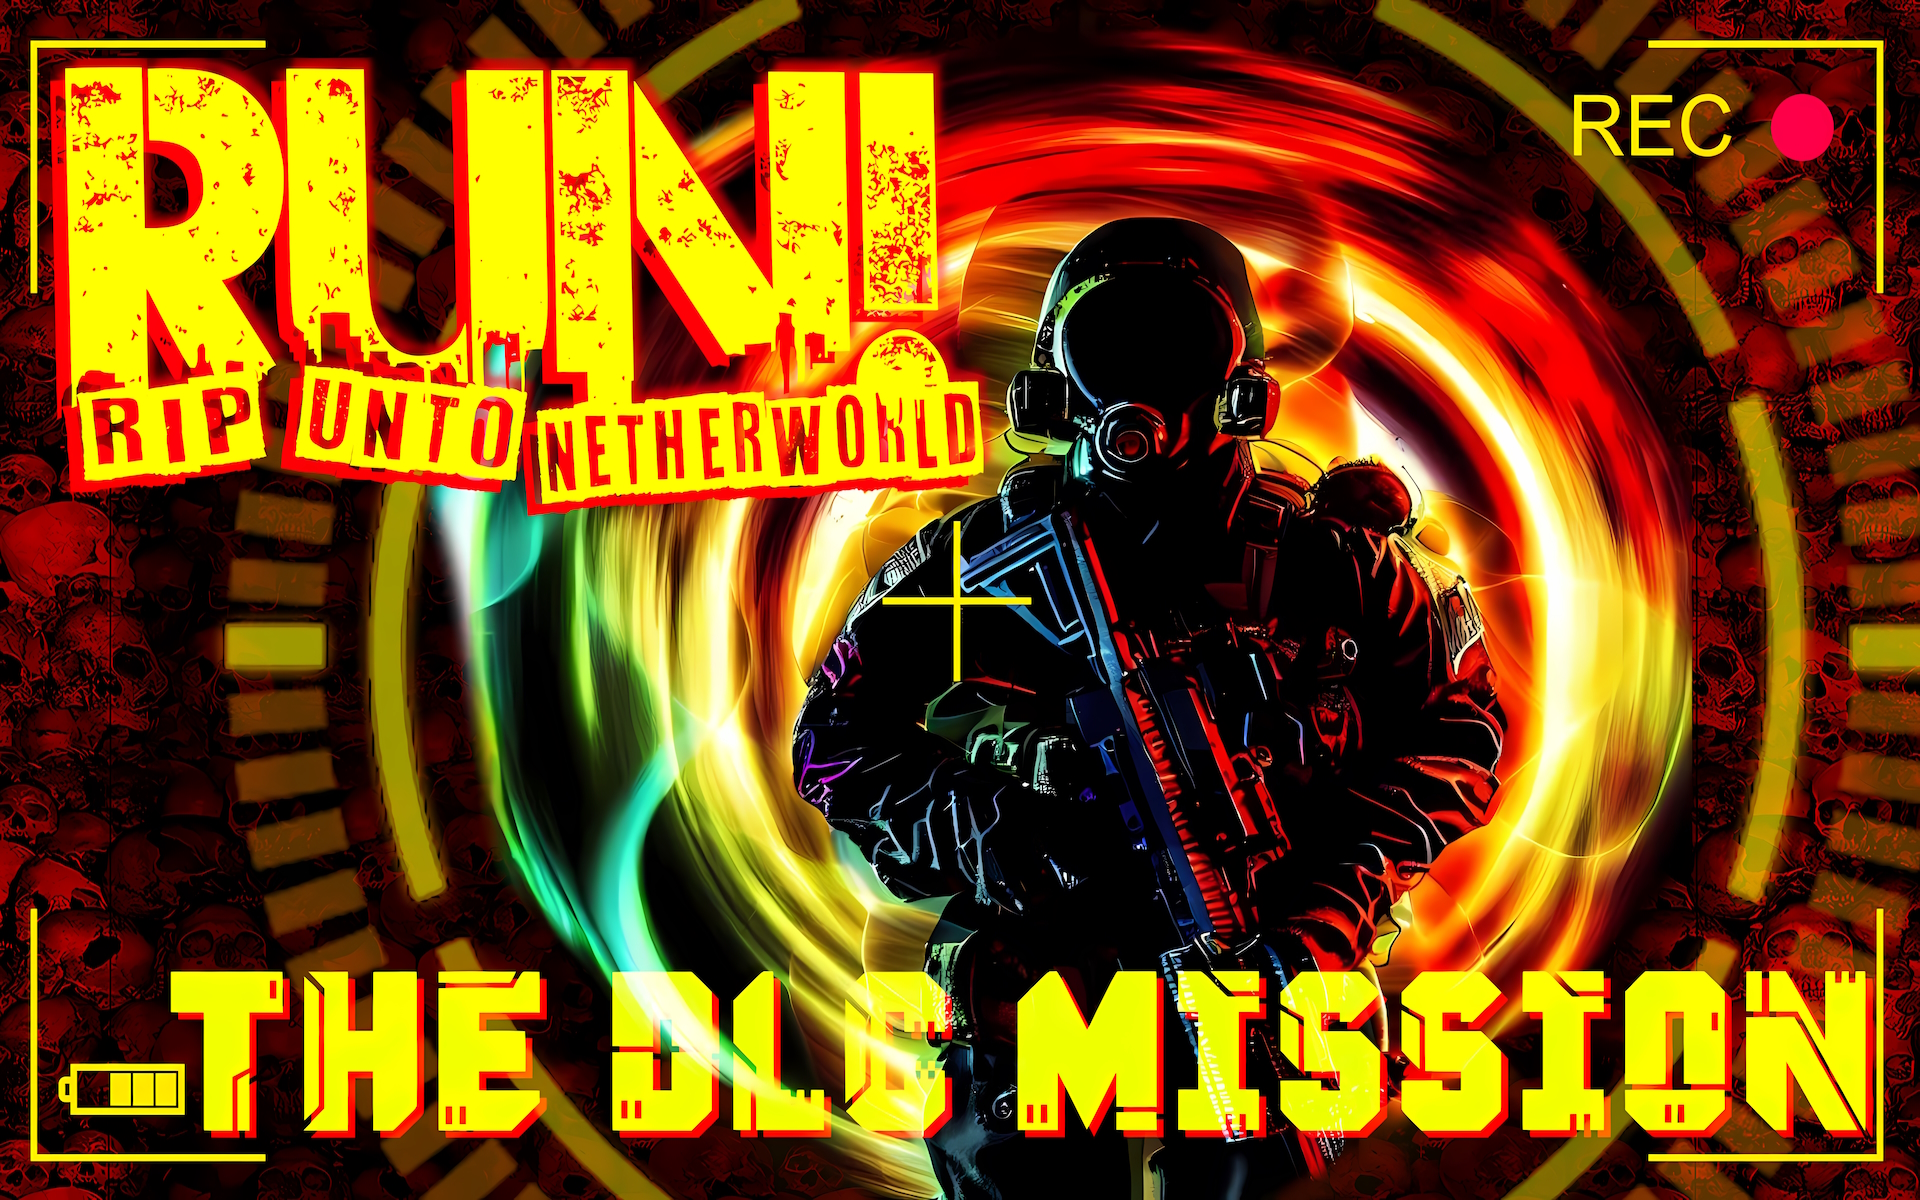 RUN!: The DLC Mission